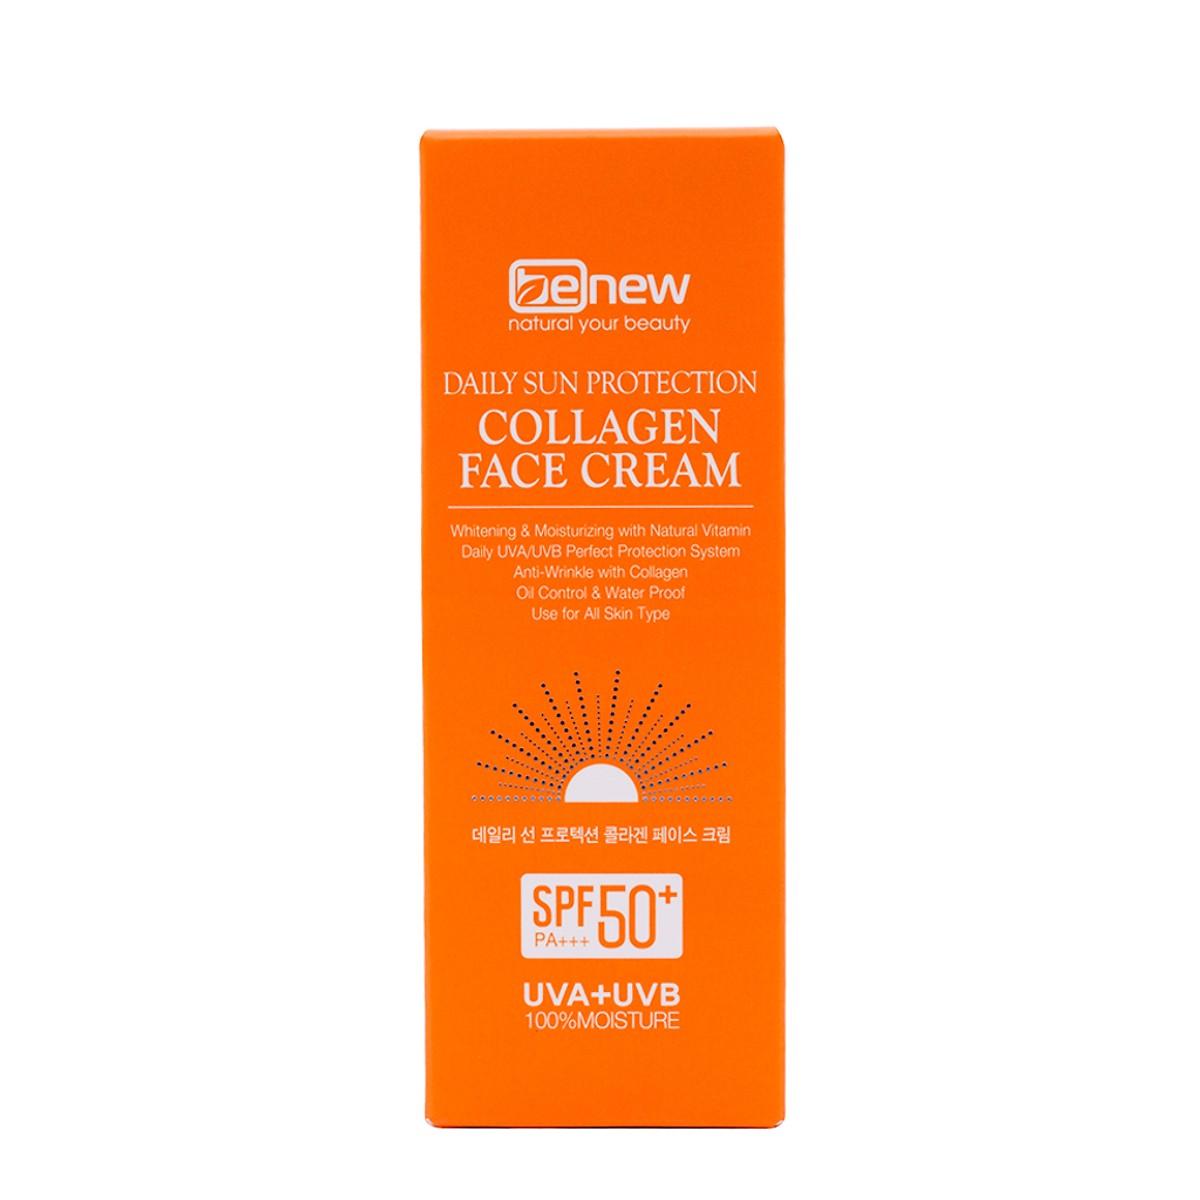 [HCM]Kem chống nắng dành cho mặt Benew Daily Sun Protection Collagen Face Cream 70ml